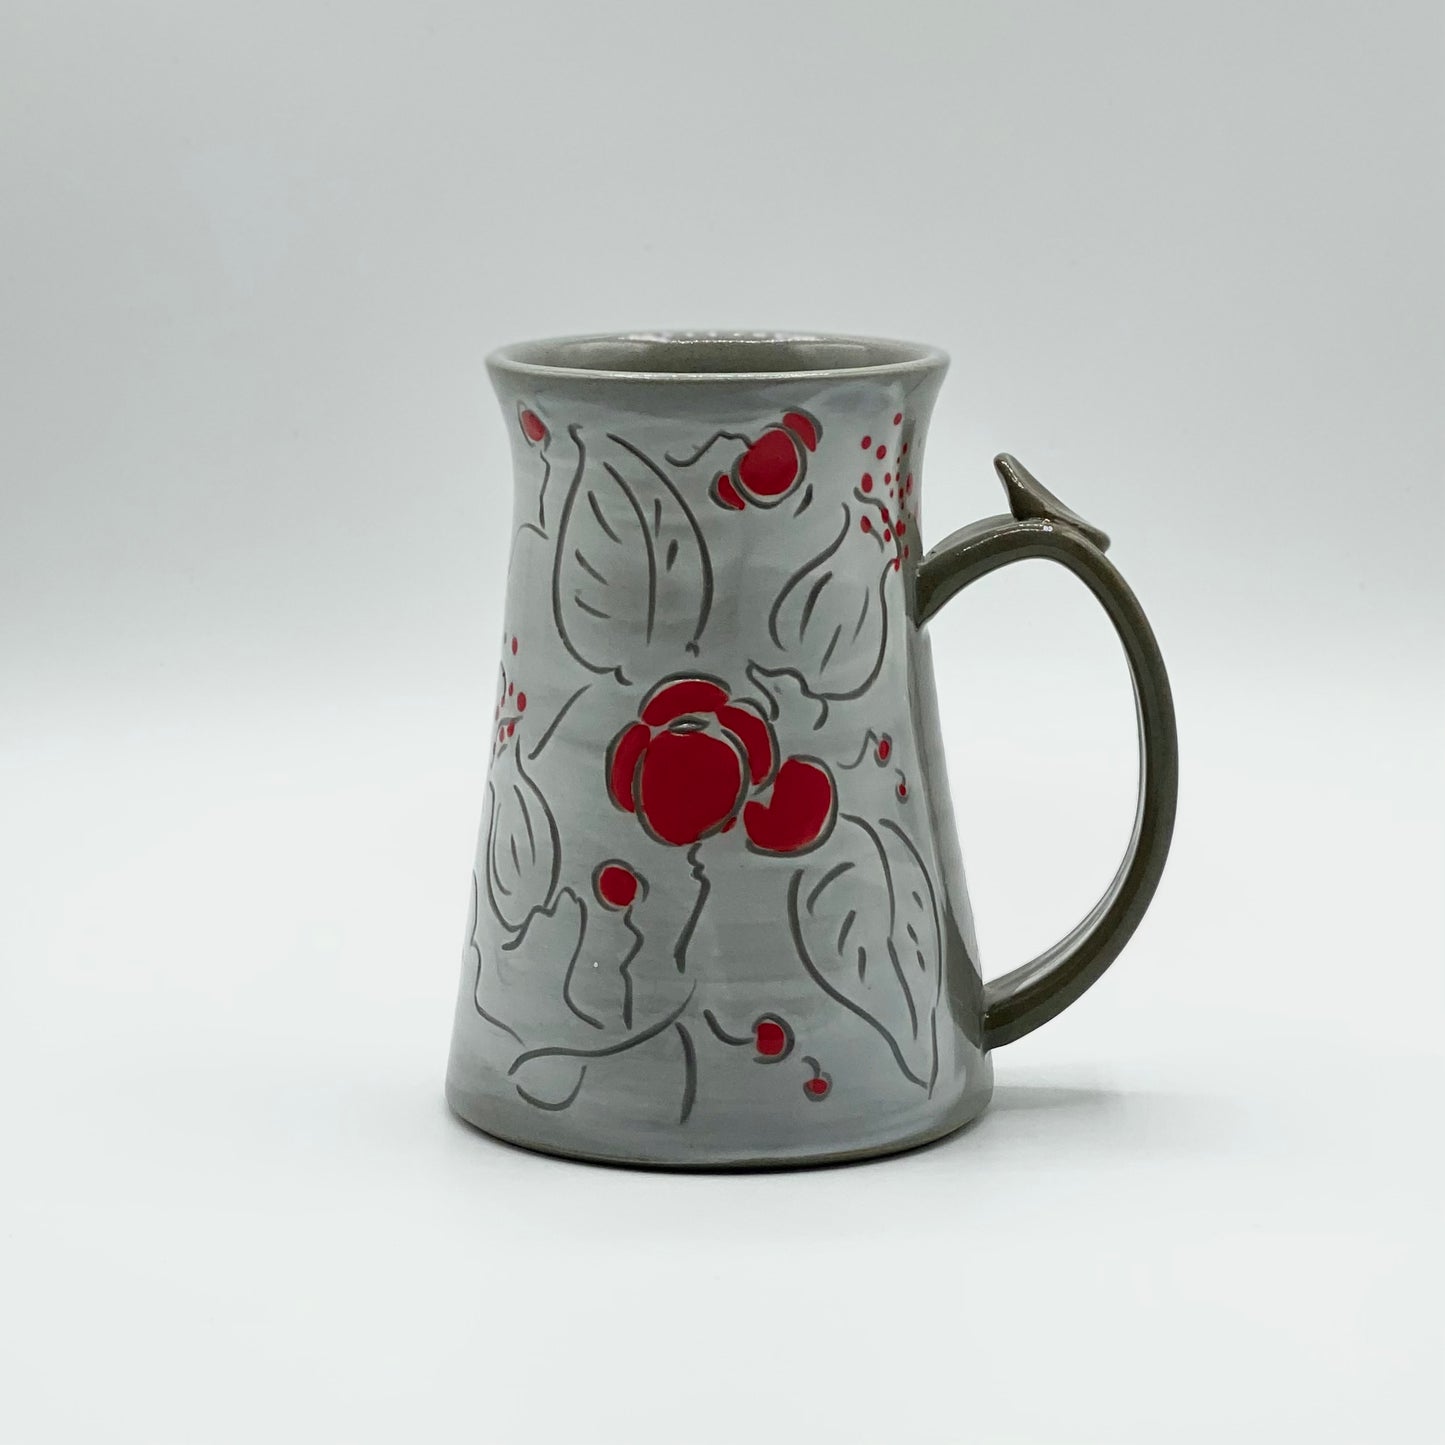 Mug by MacKinley Ceramics